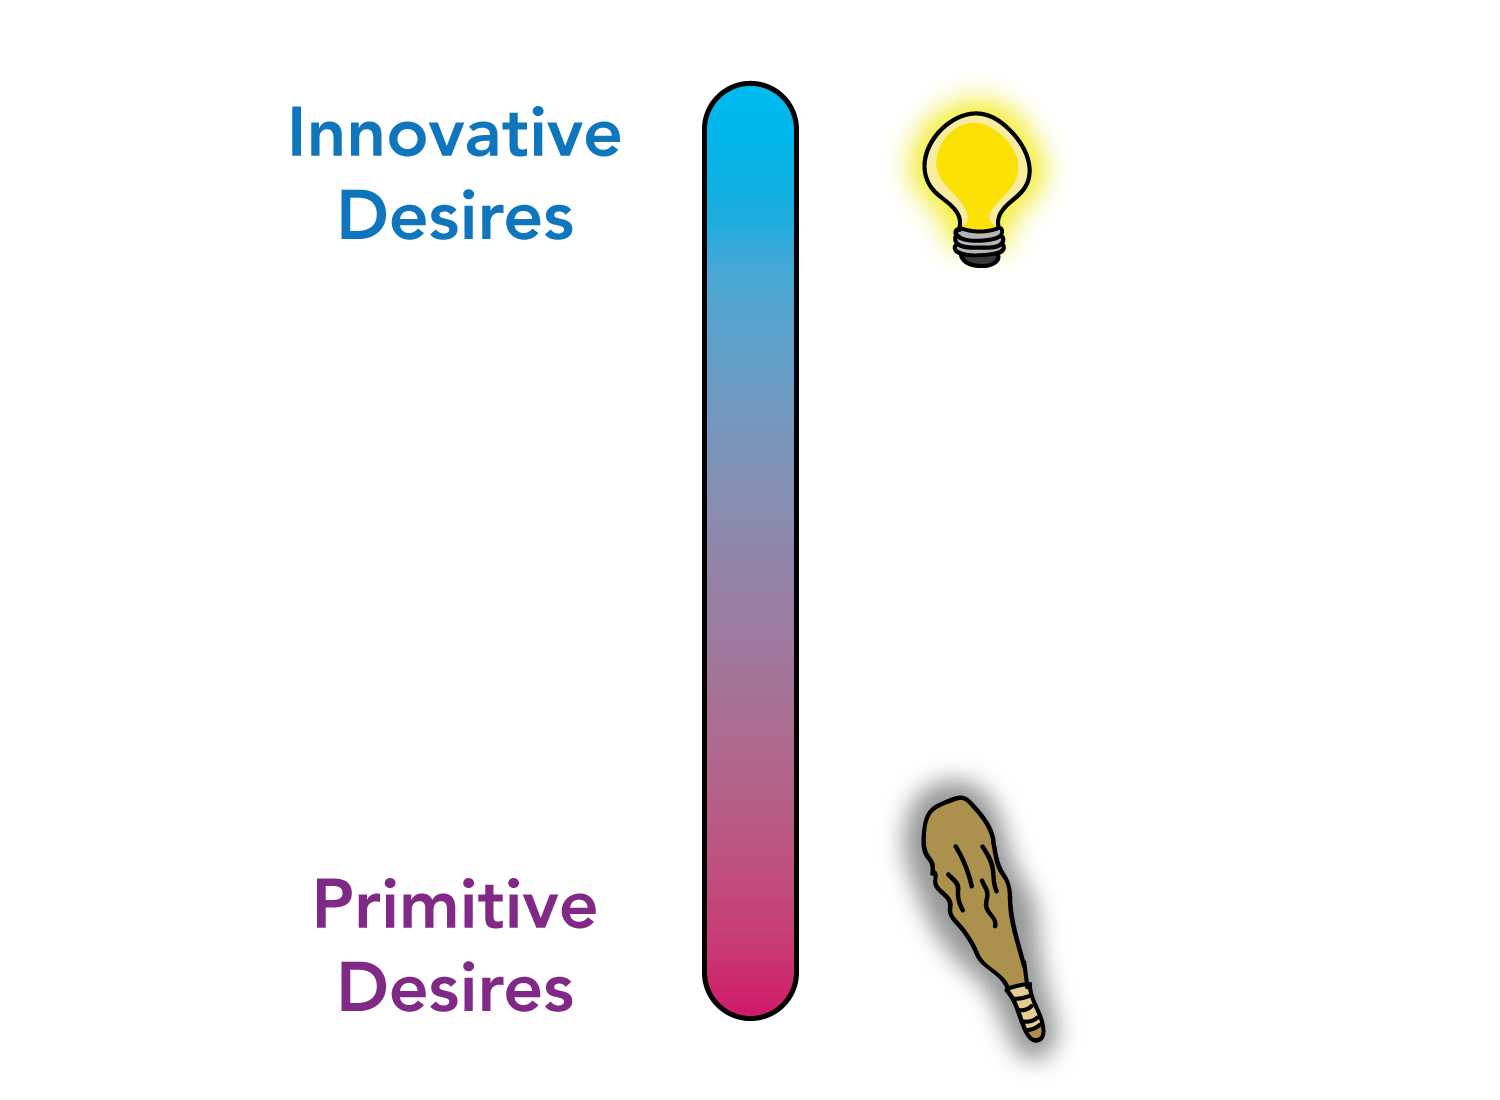 spectrum of desires - innovative and primitive